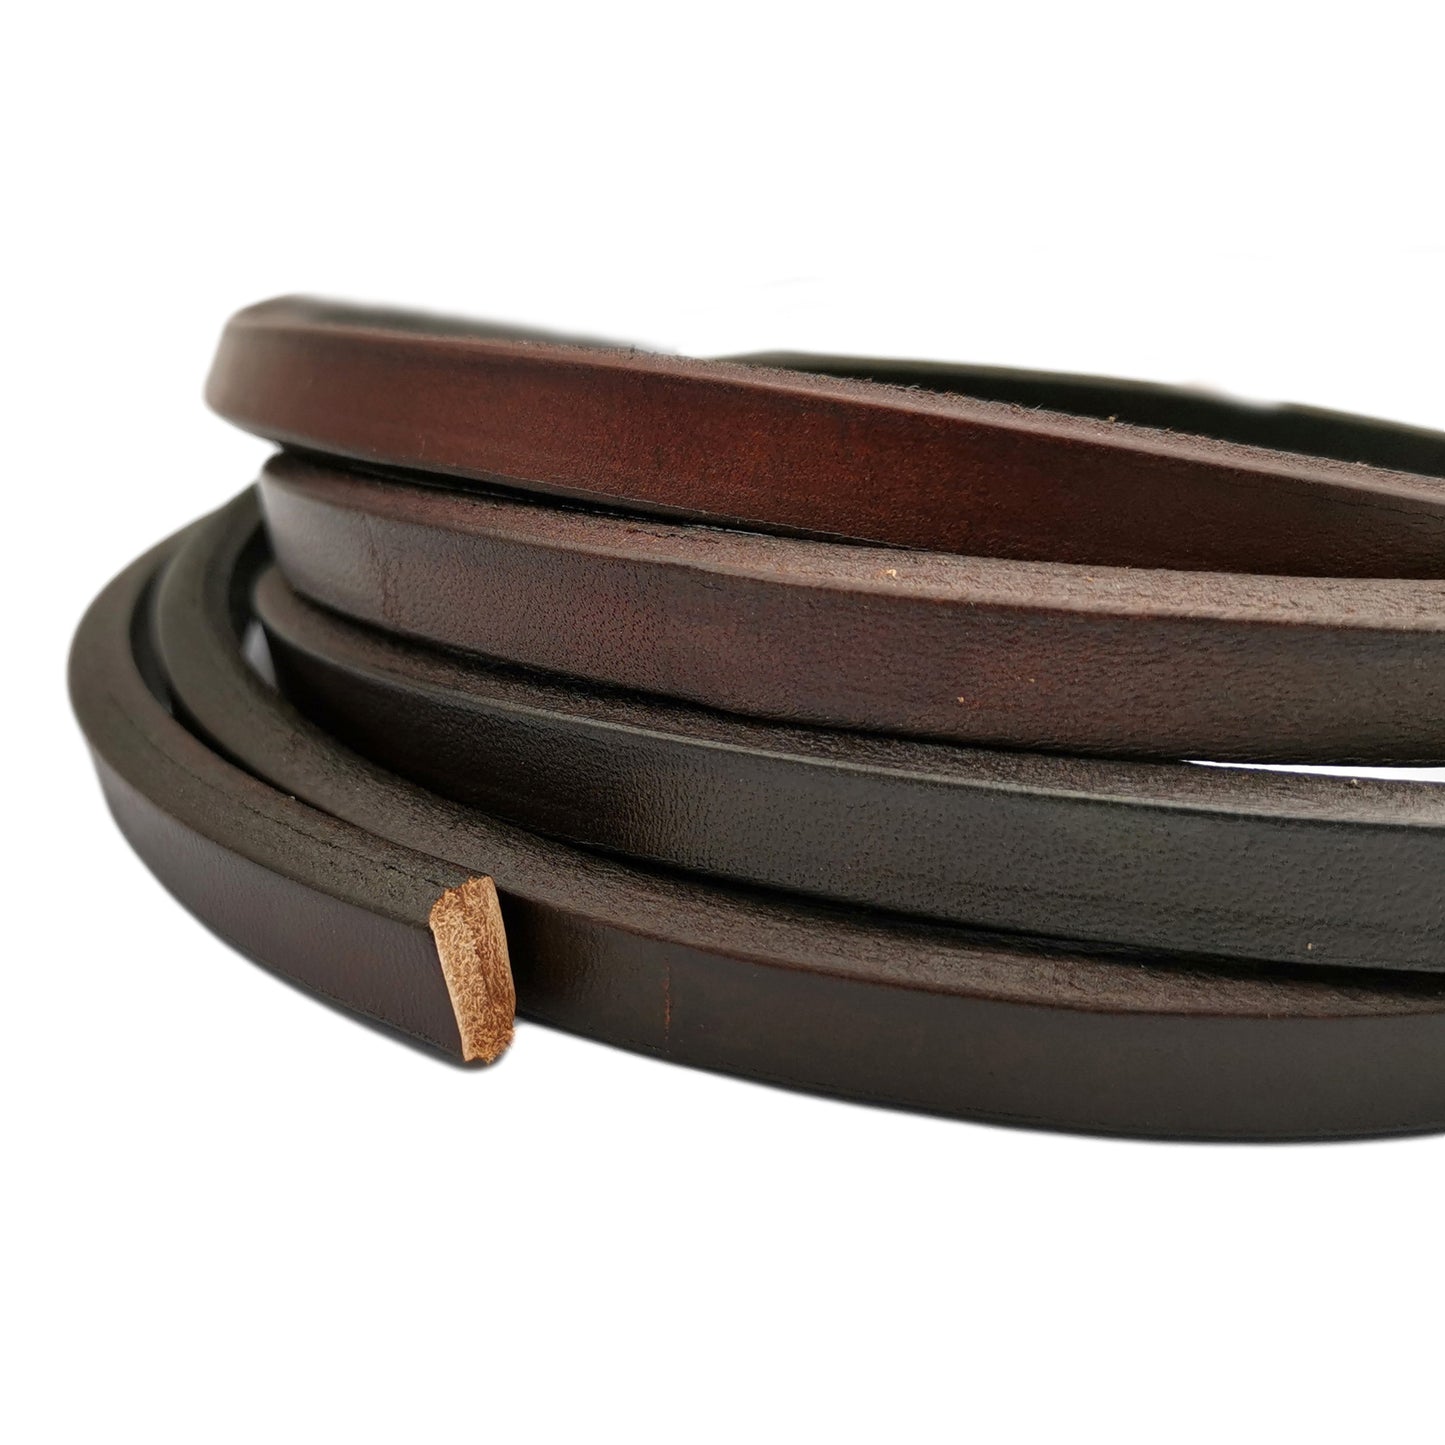 shapesbyX-1 Yard Licorice Leather Cords Black 10mmx6mm Leather Bangle Bracelet Making 10x6mm